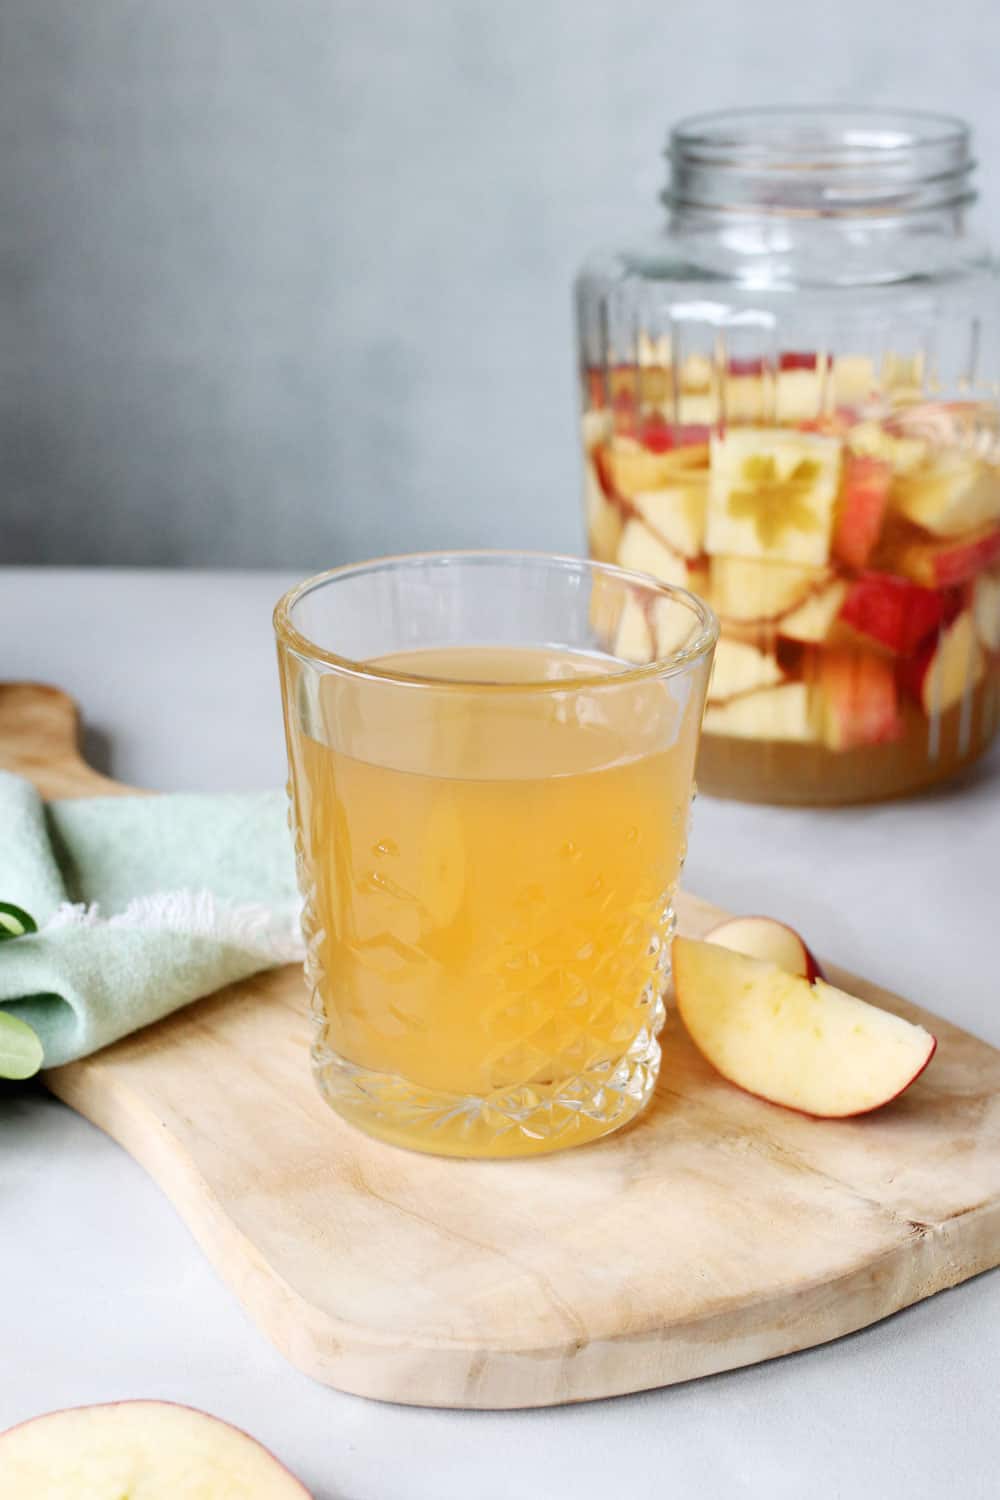 Making Your Own Apple CIder Vinegar